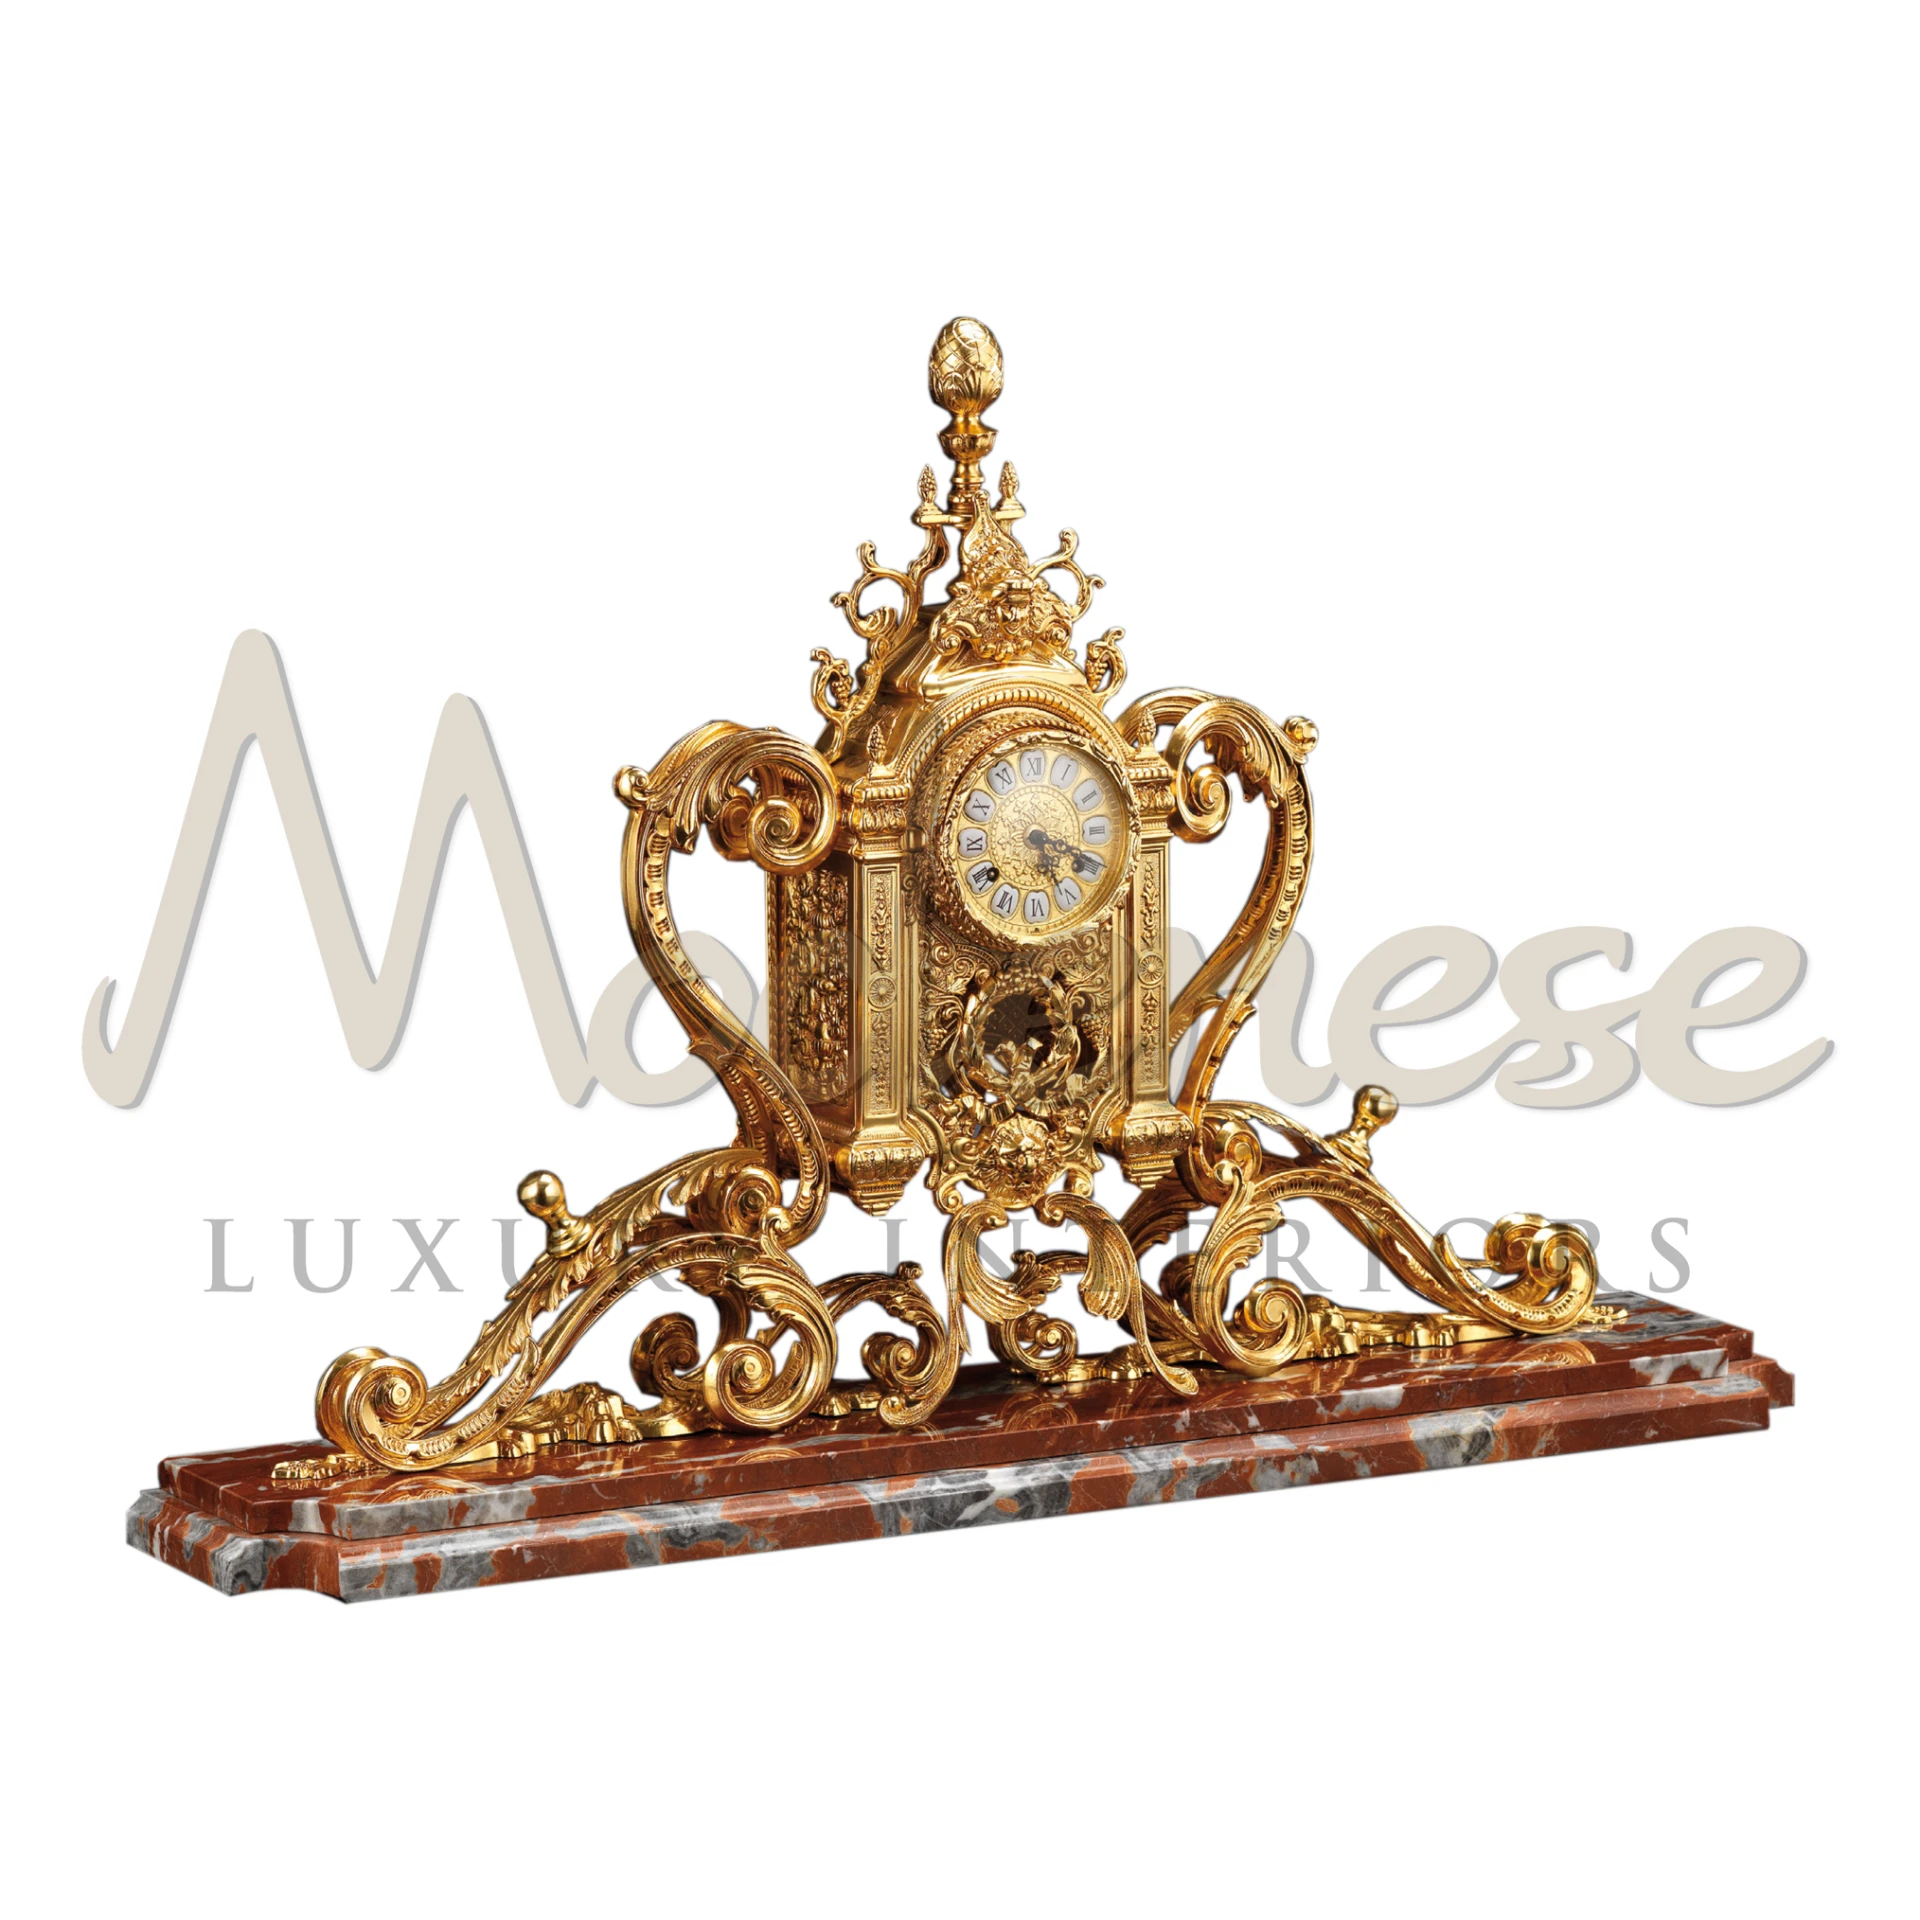 Luxury Italian Mechanical Charge Clock, a high-end ornamental masterpiece
